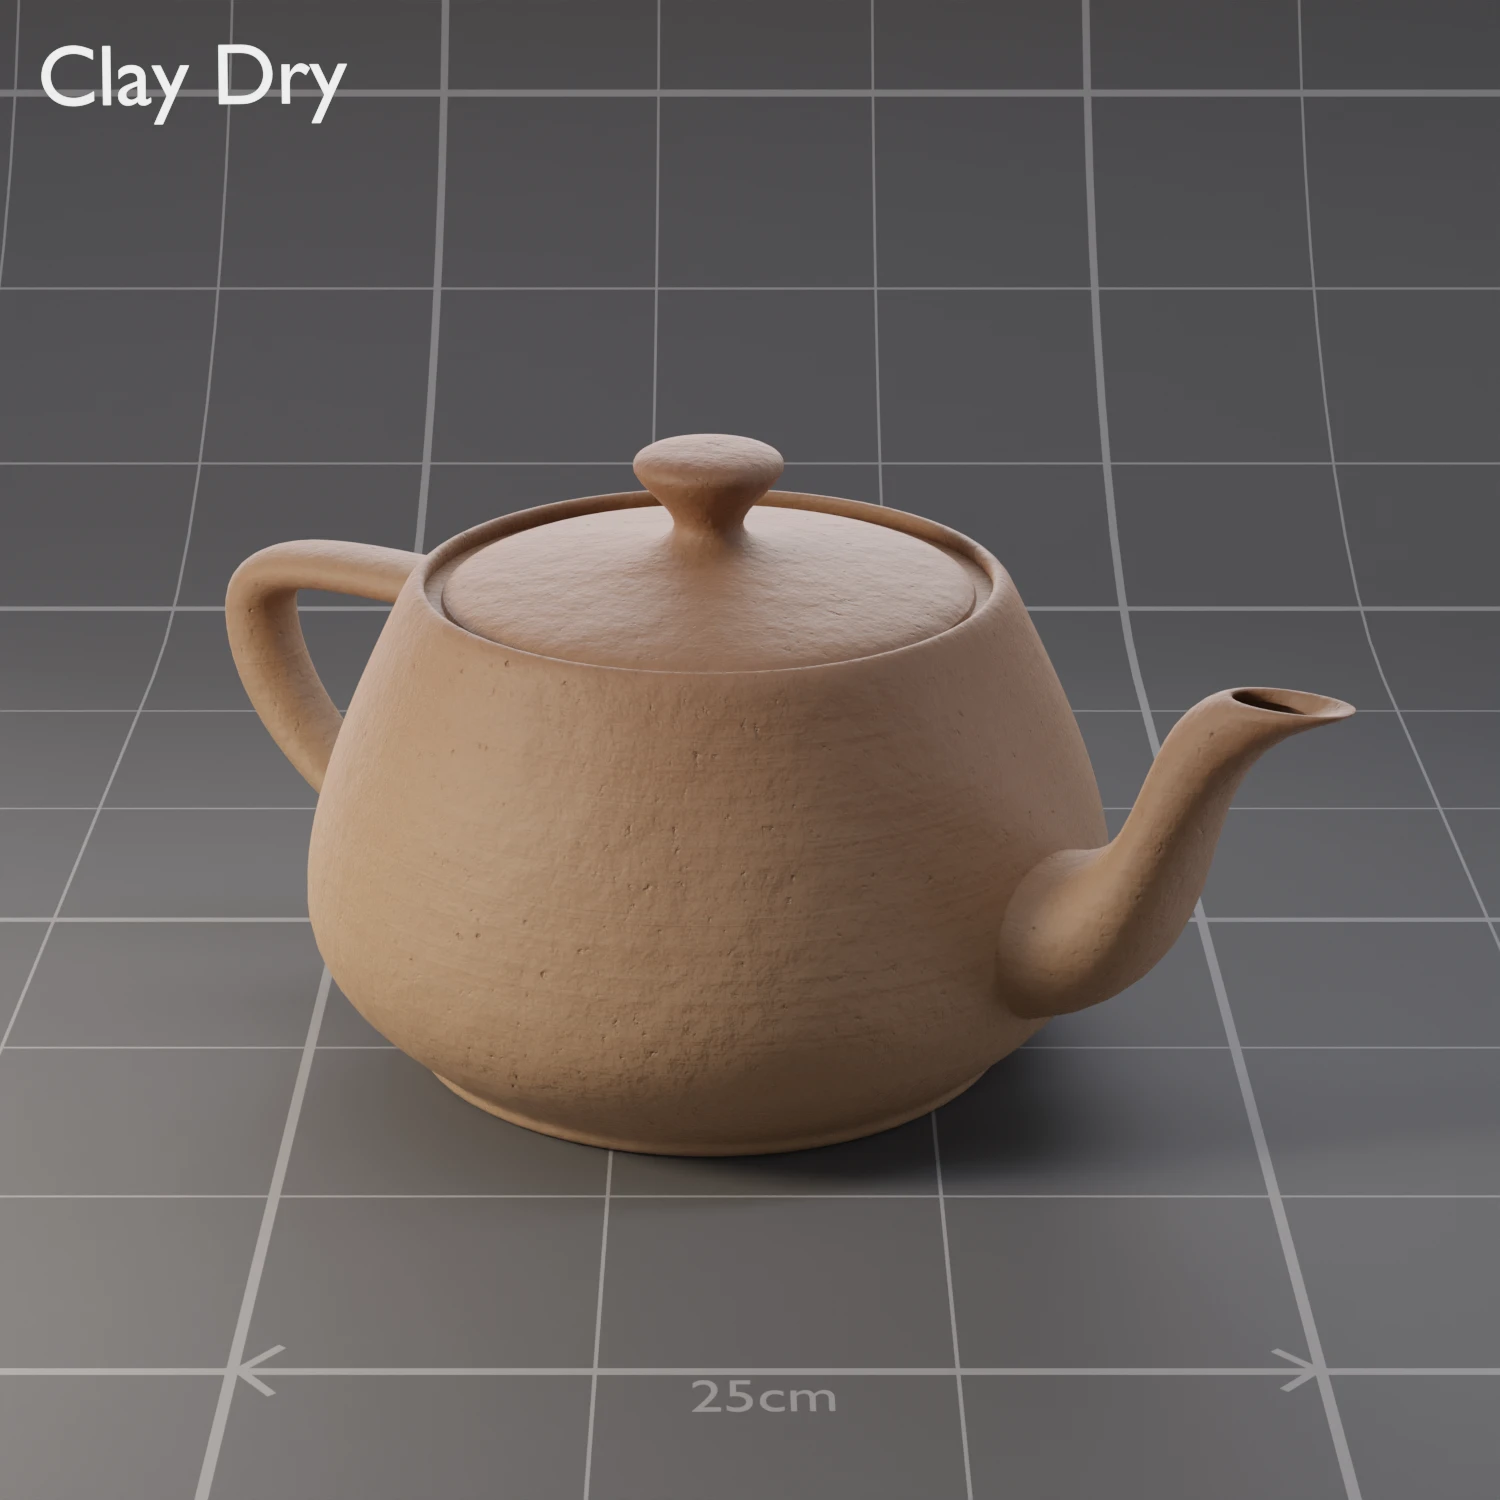 /pr/image/mats/Clay Dry.WebP